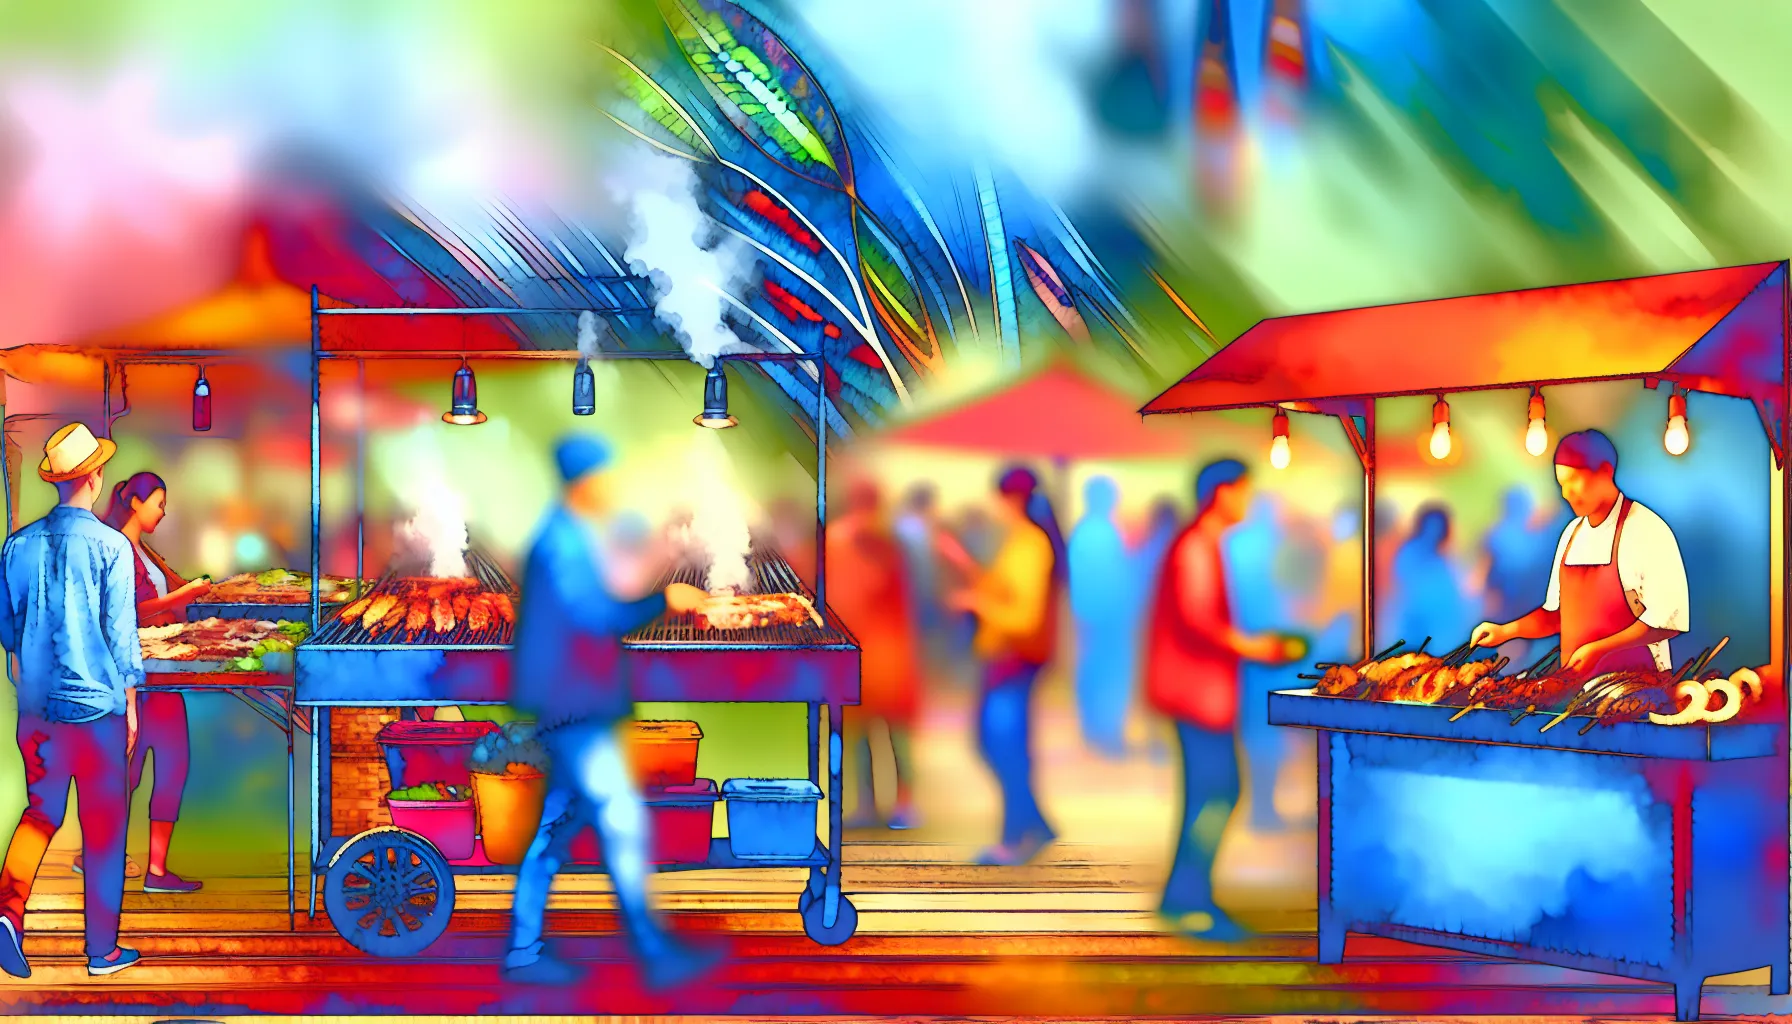 Bustling street food market scene